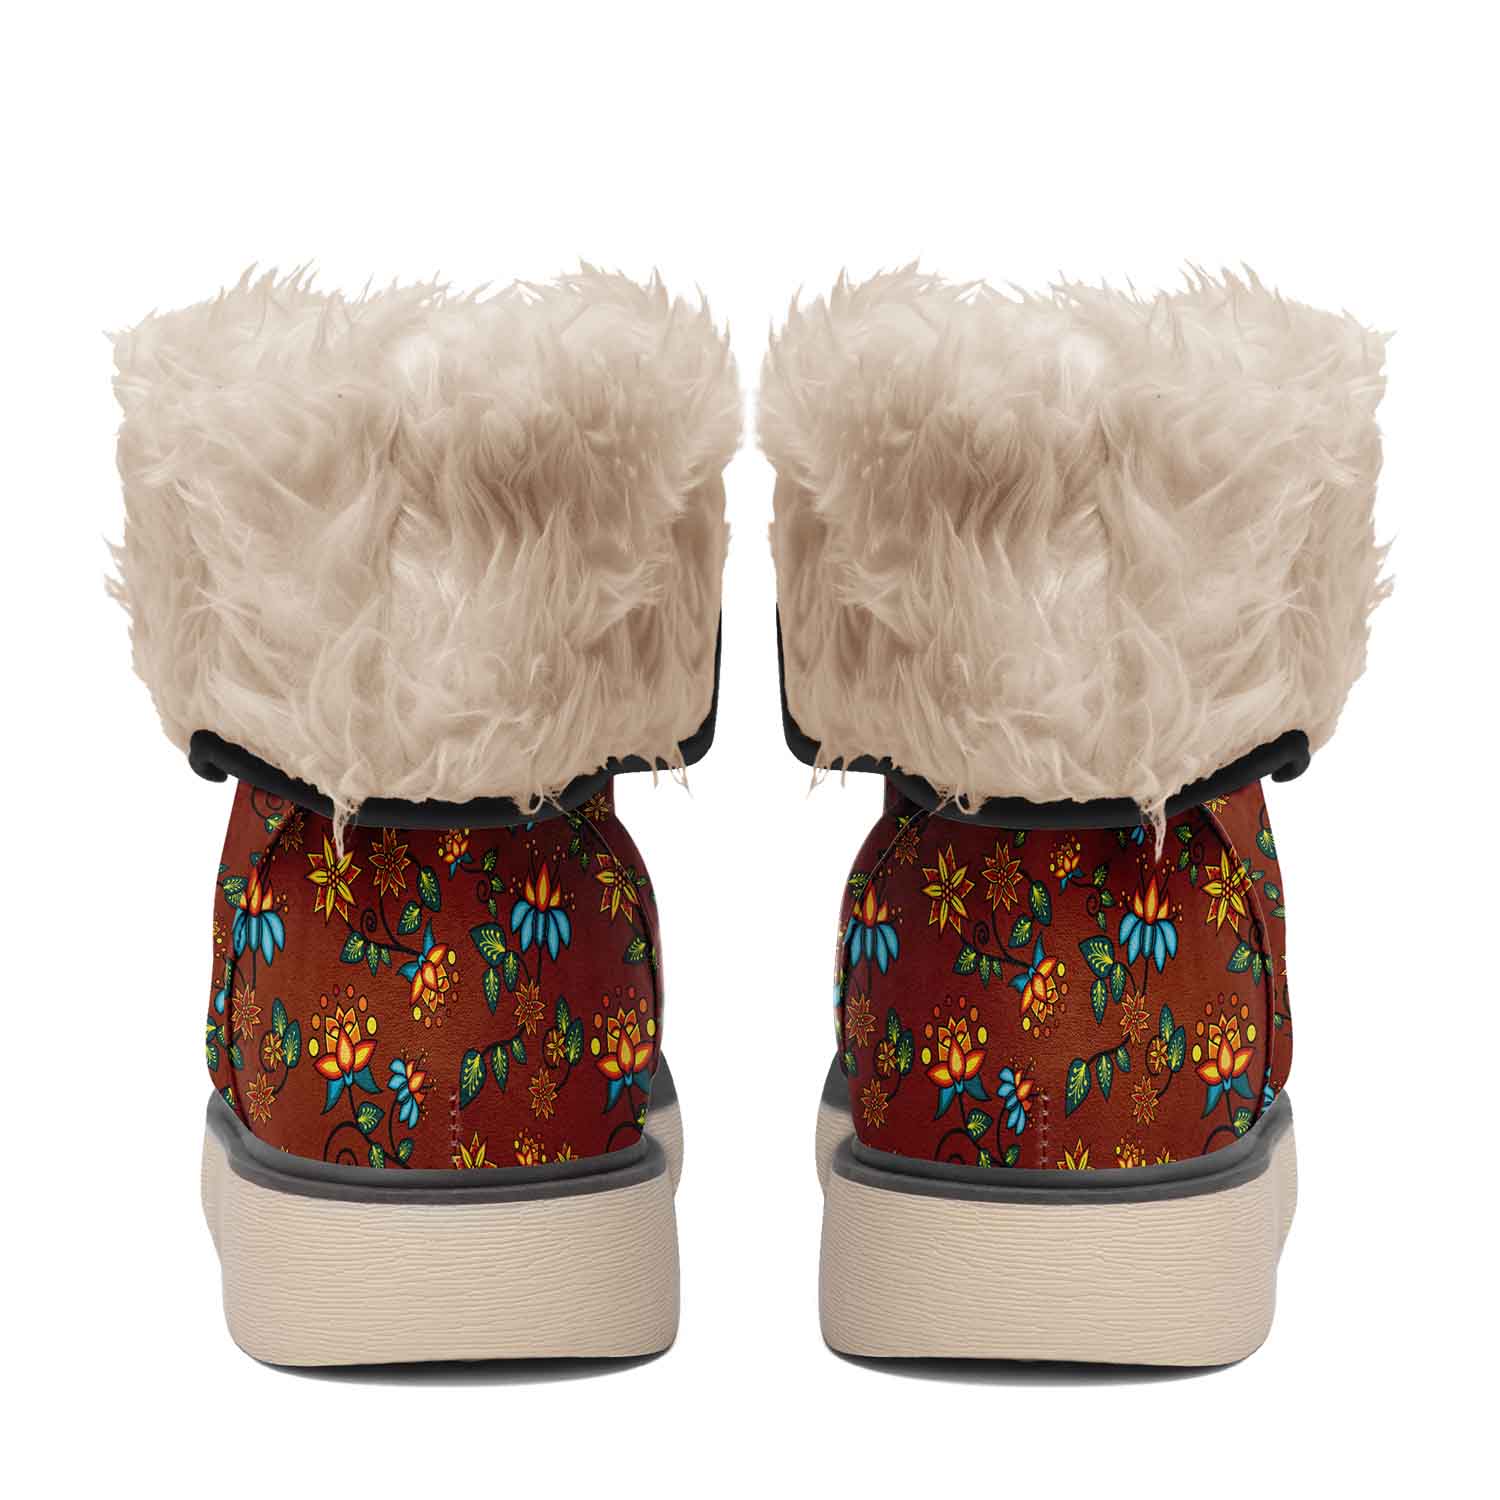 Lily Sierra Polar Winter Boots